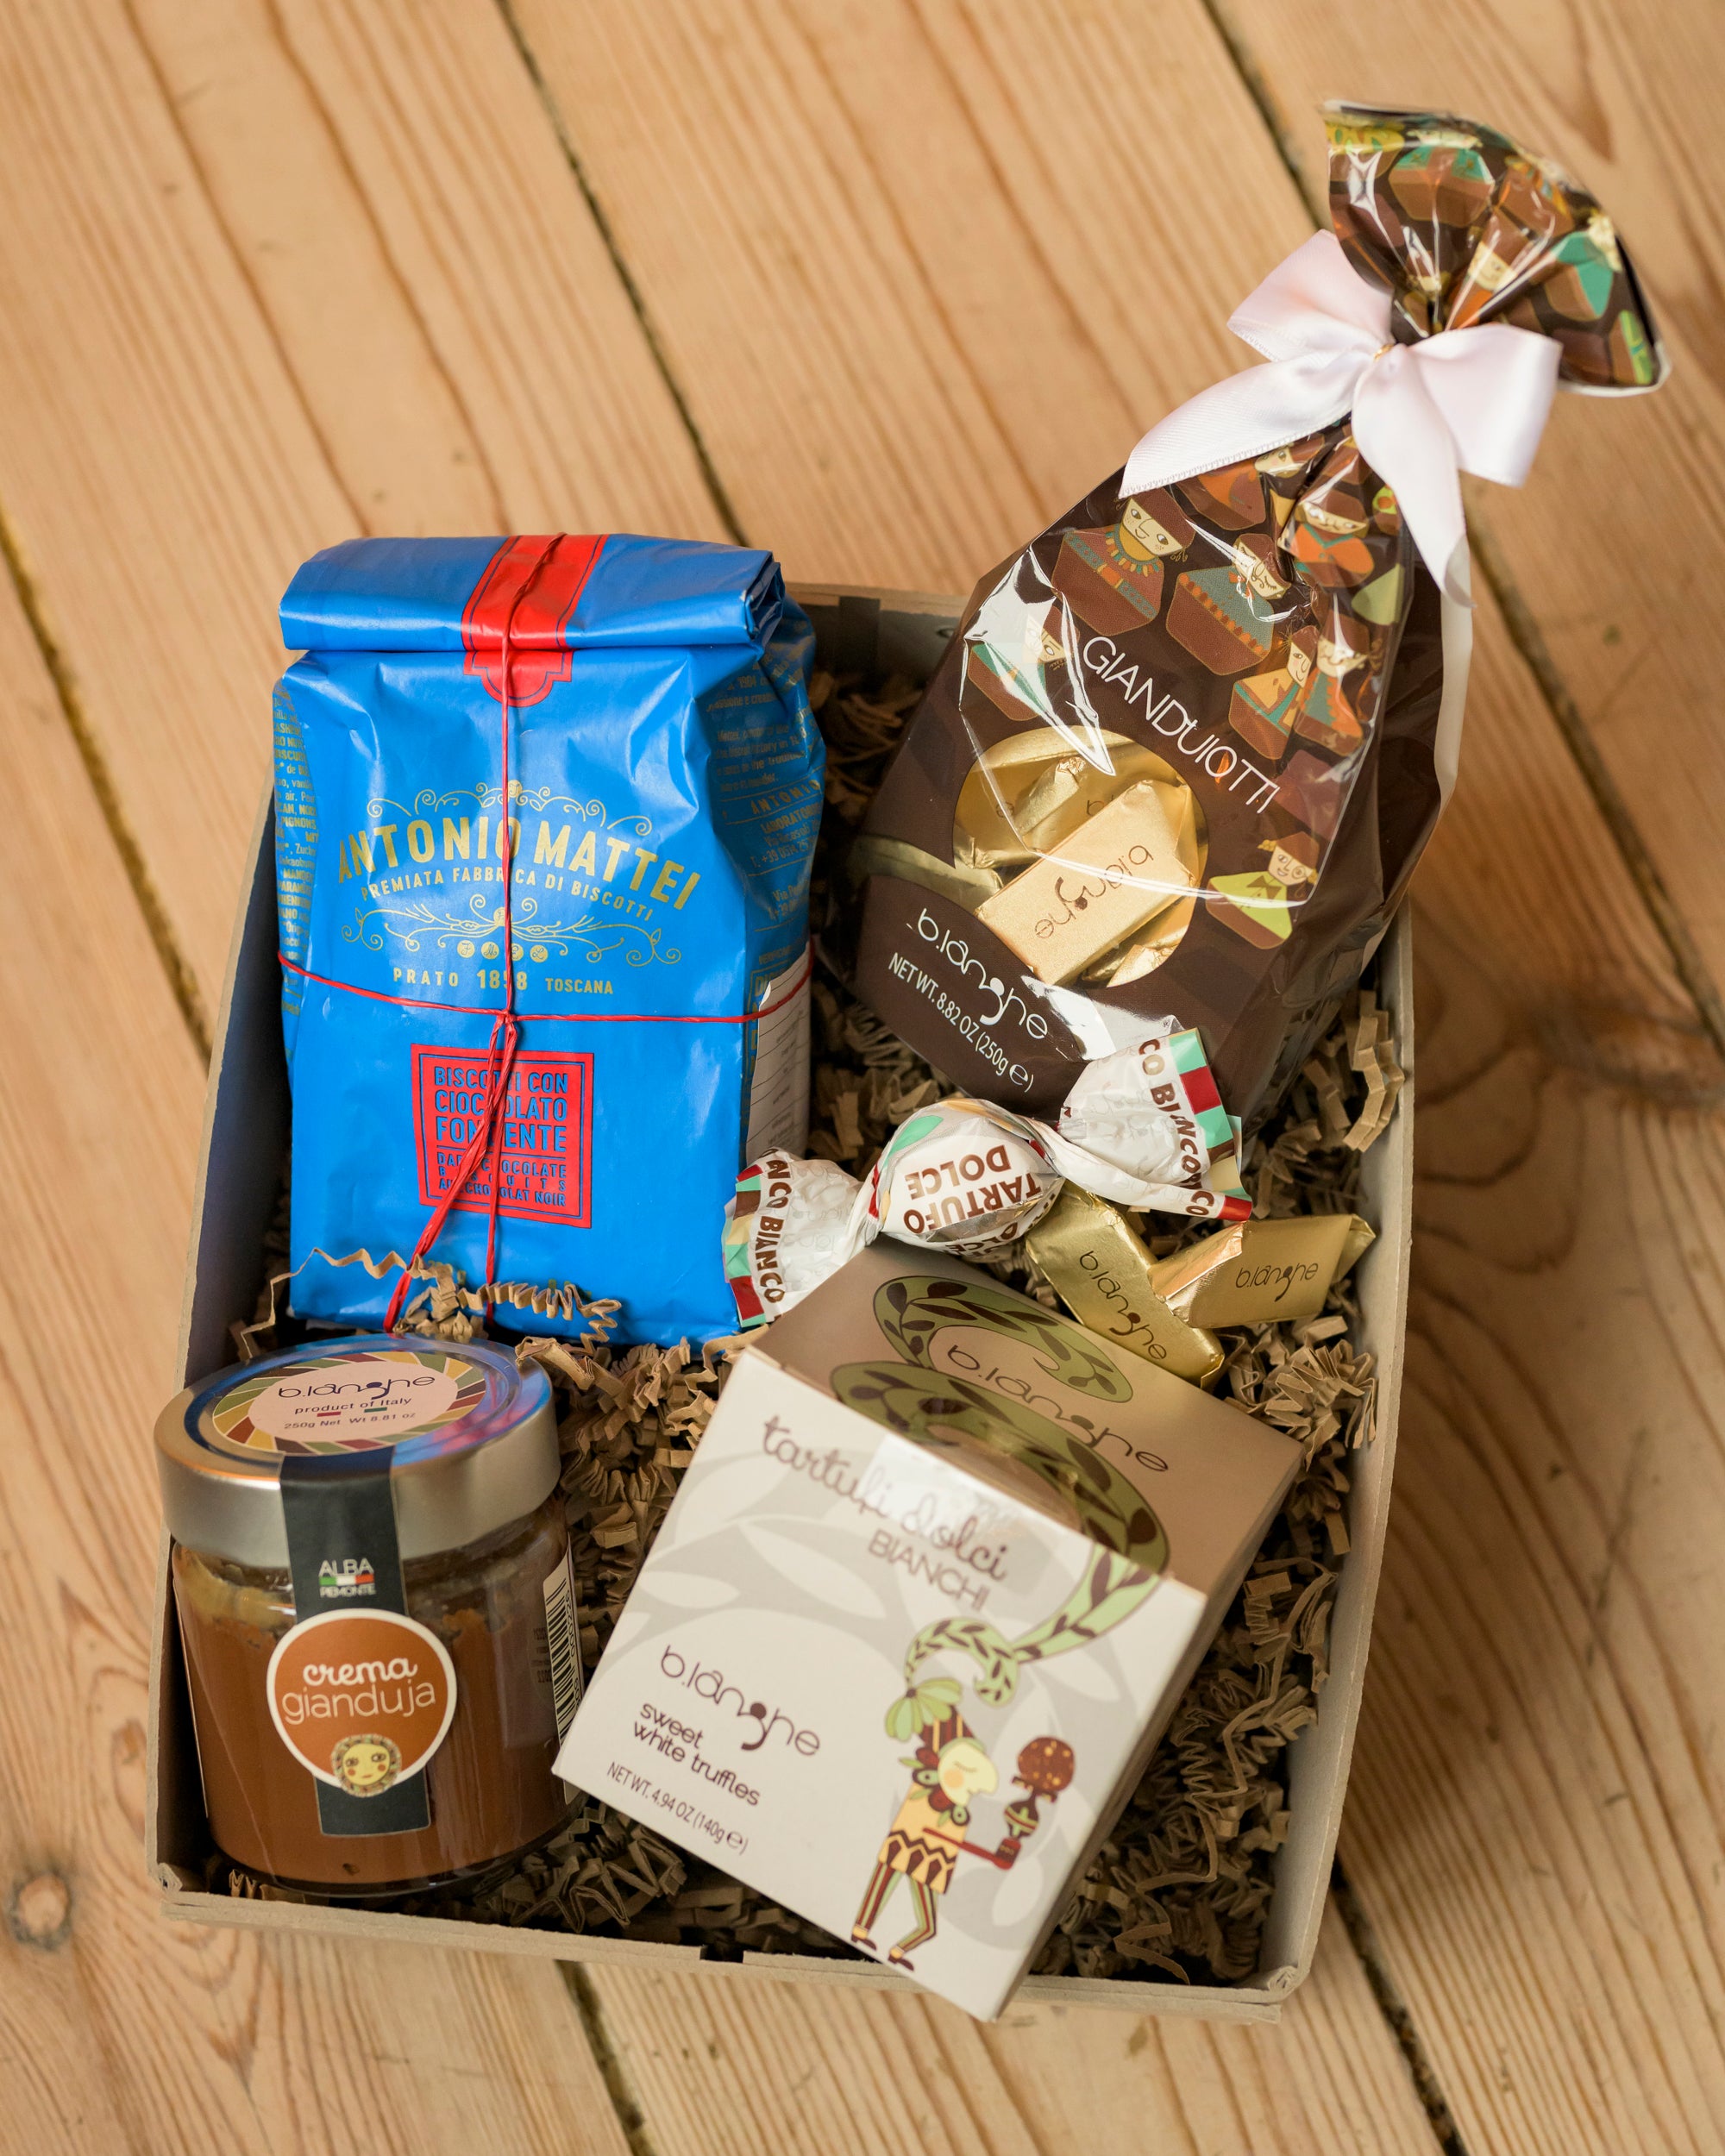 "A Chocolatey Break" gift box